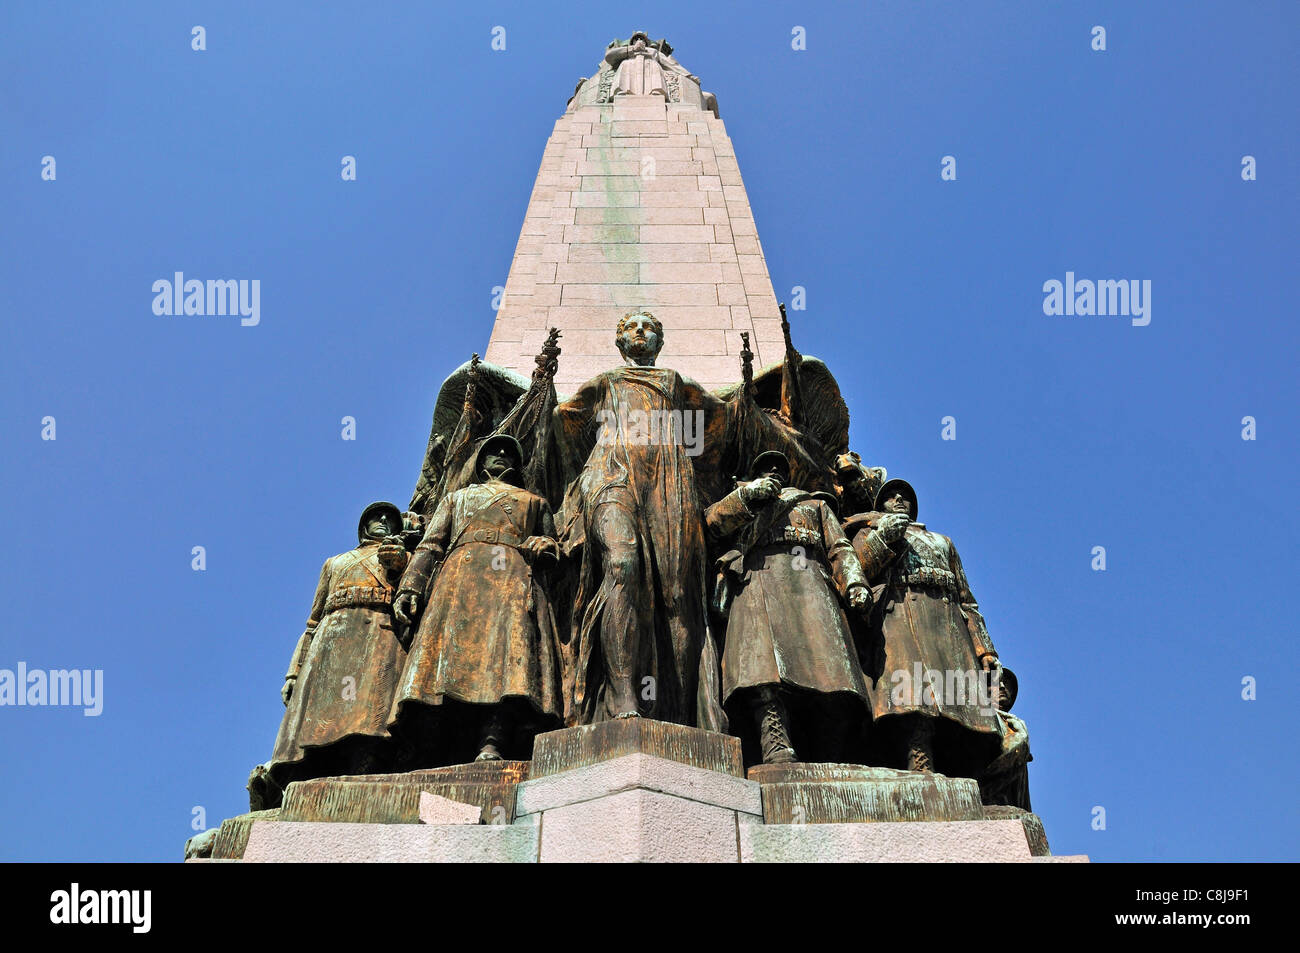 Belgium, Brussels, monument, Europe, figures, memorial, history, infantry, city center, war memorial, war, victim, culture, memo Stock Photo